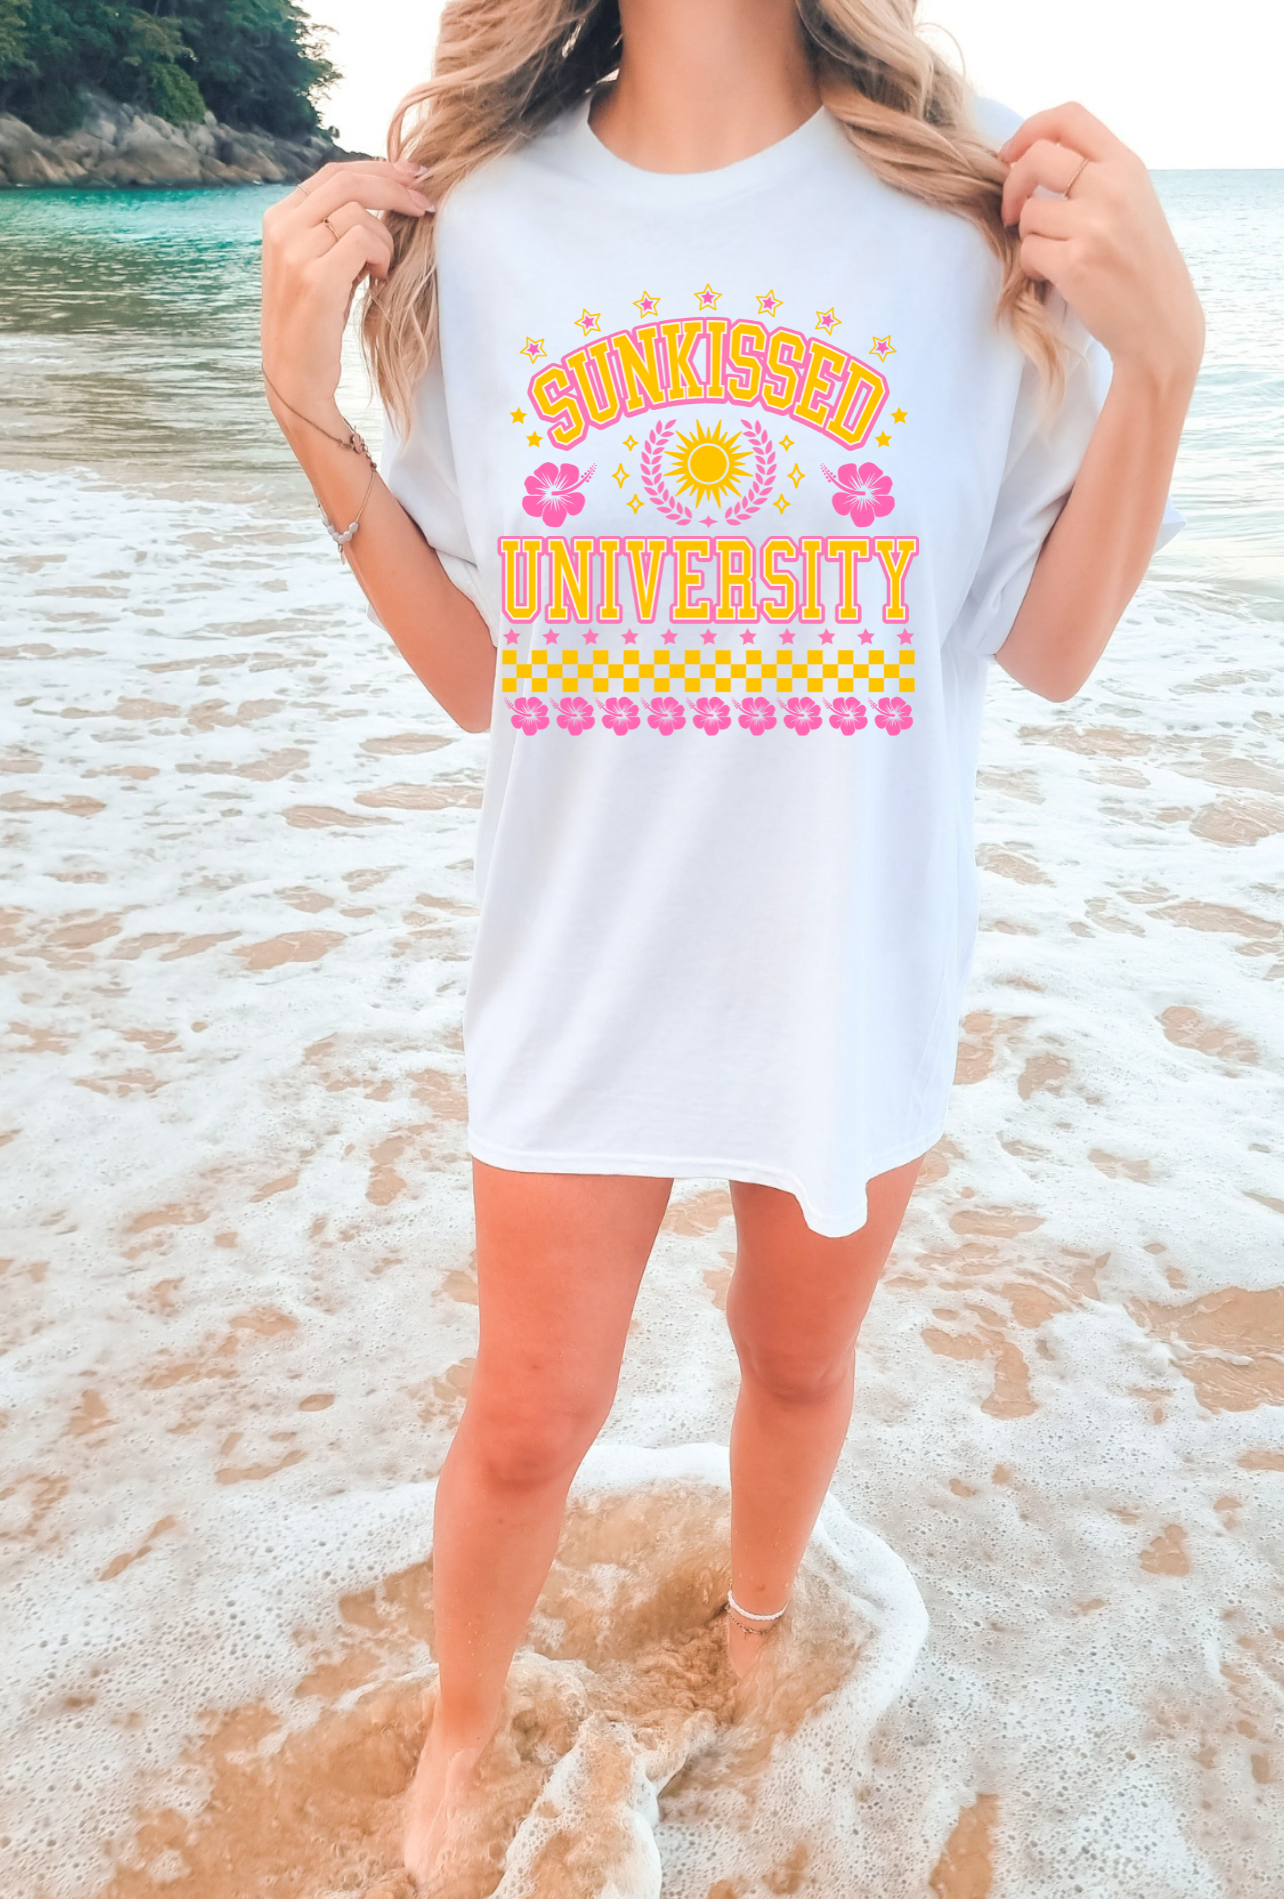 Sunkissed University T-Shirt